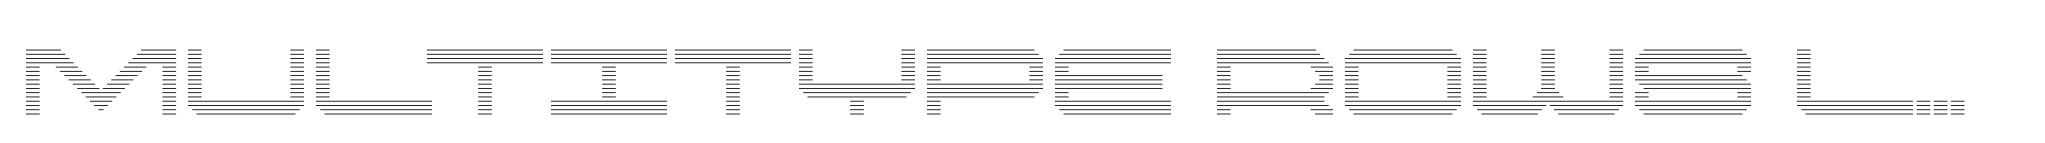 MultiType Rows Loose 3 image